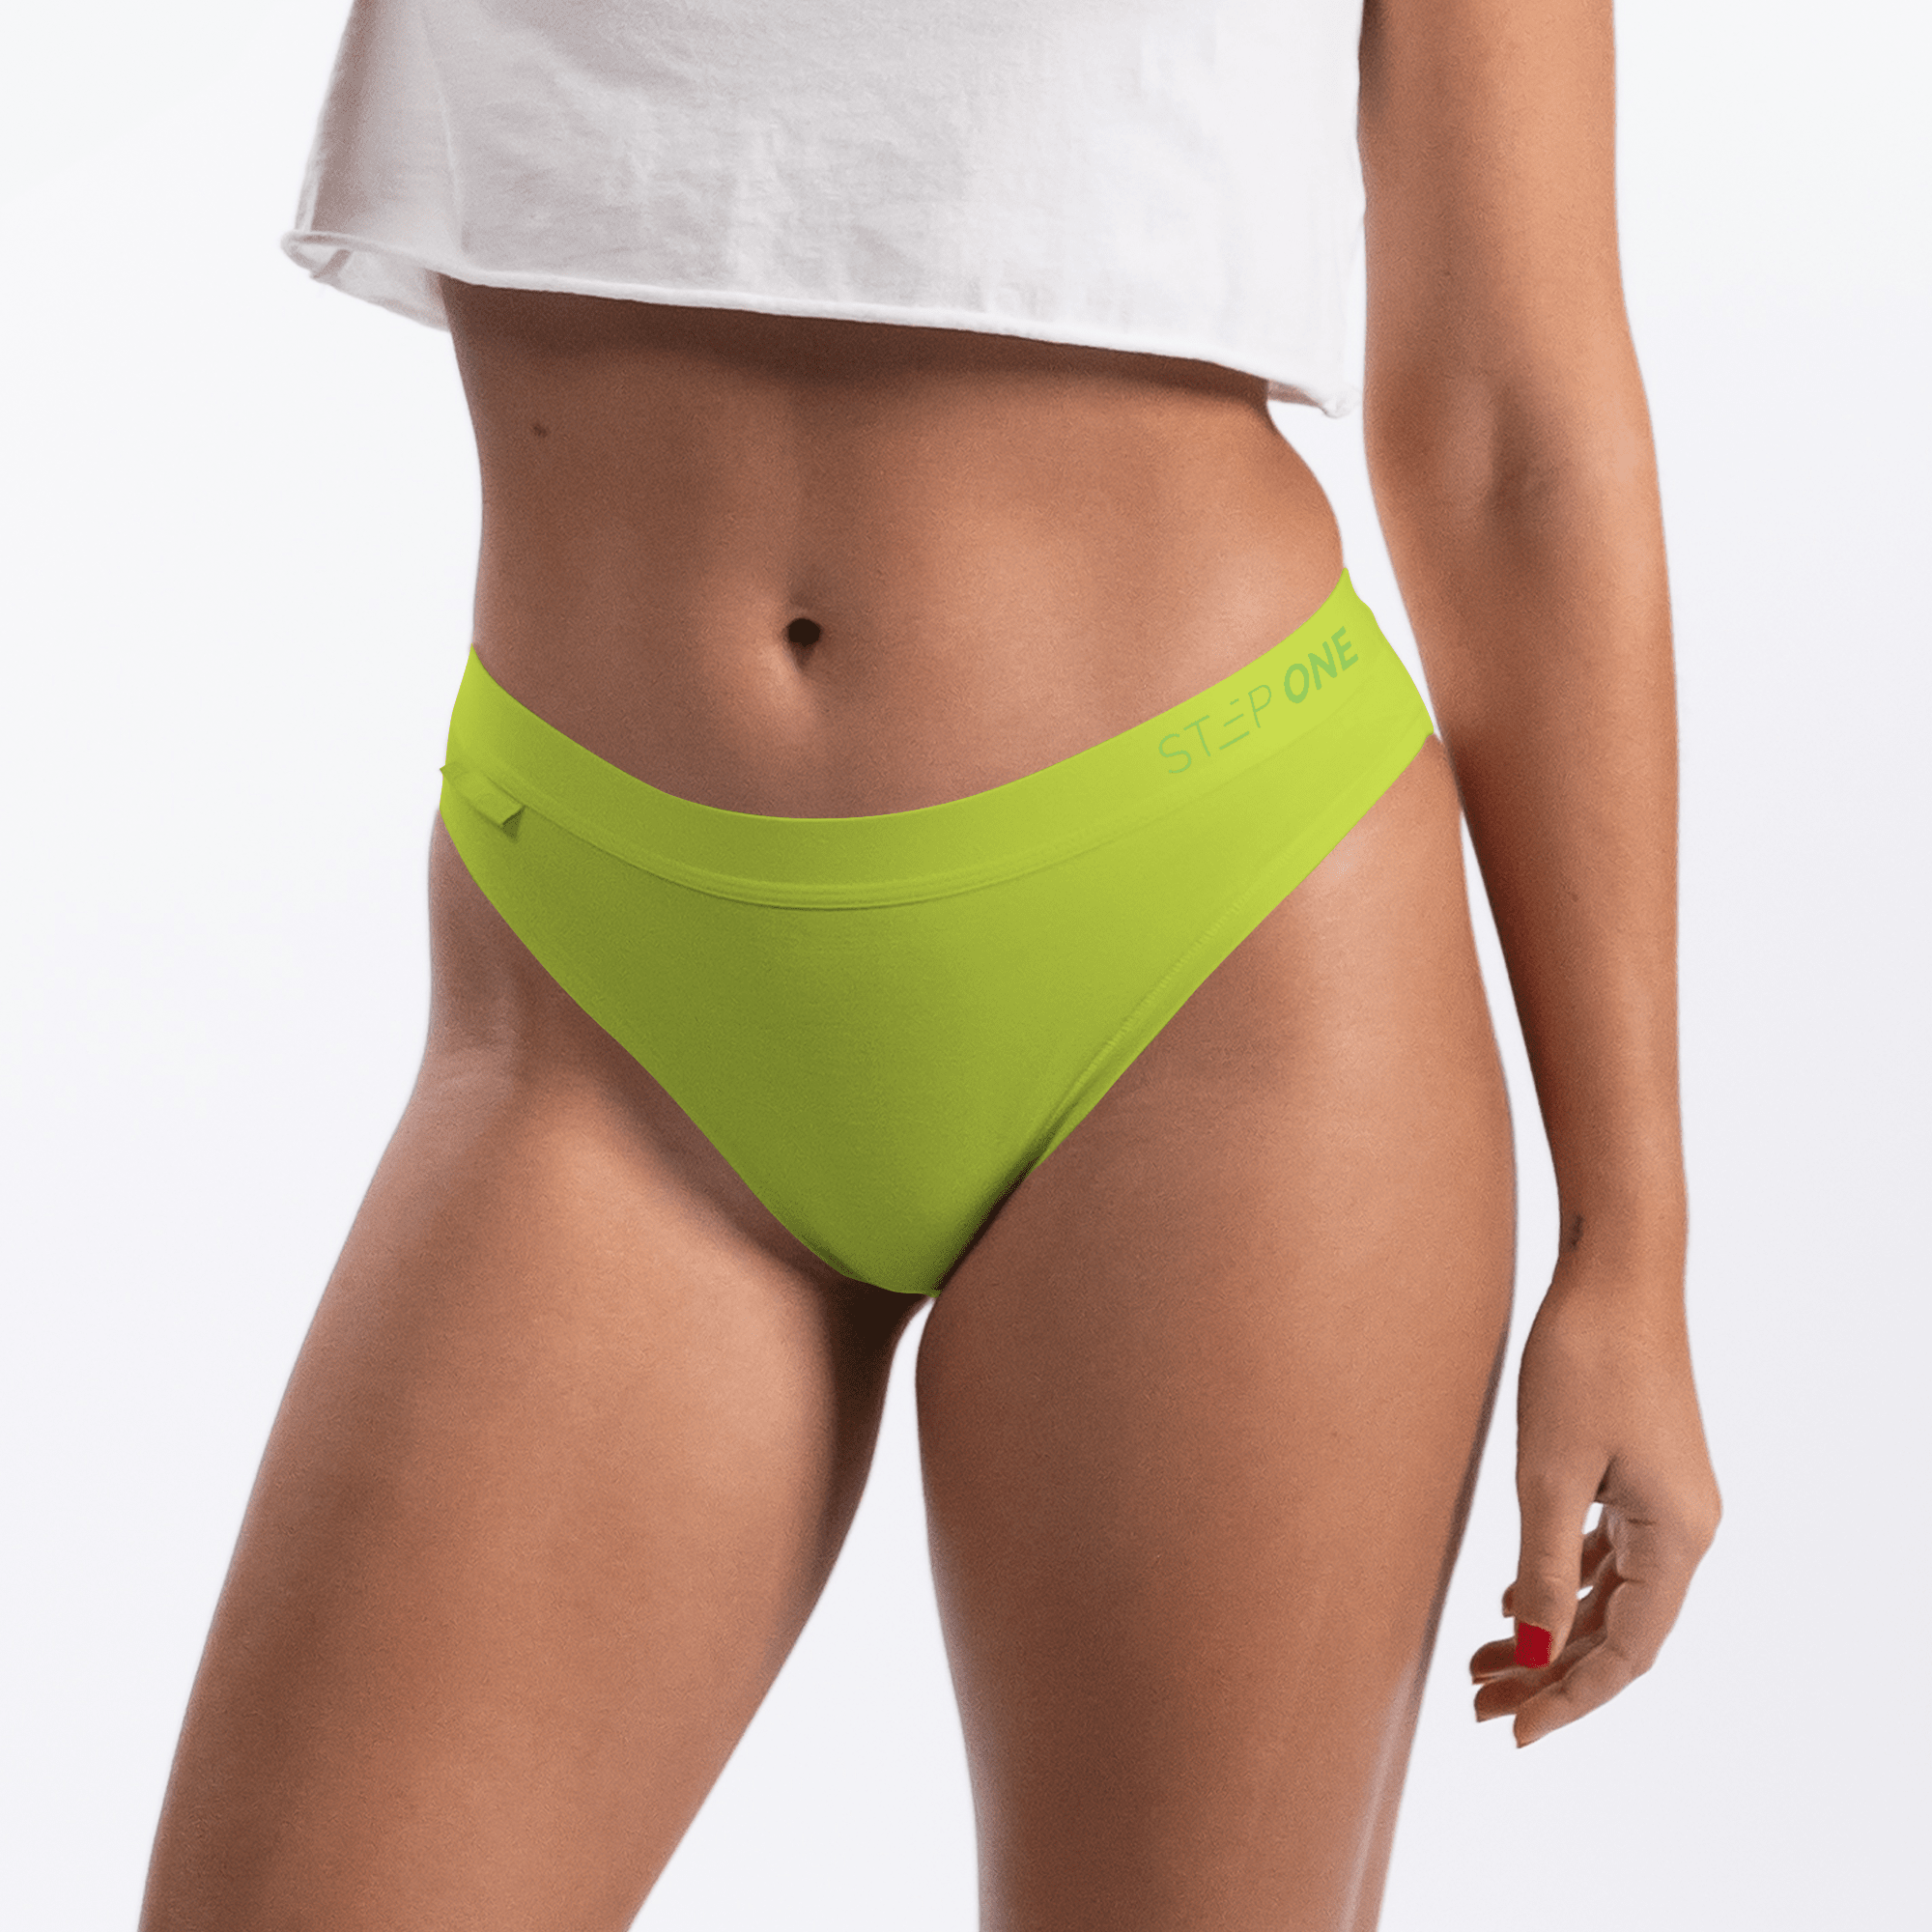 Underwear brand Step One debuts women's bikini brief collection - DIARY  directory